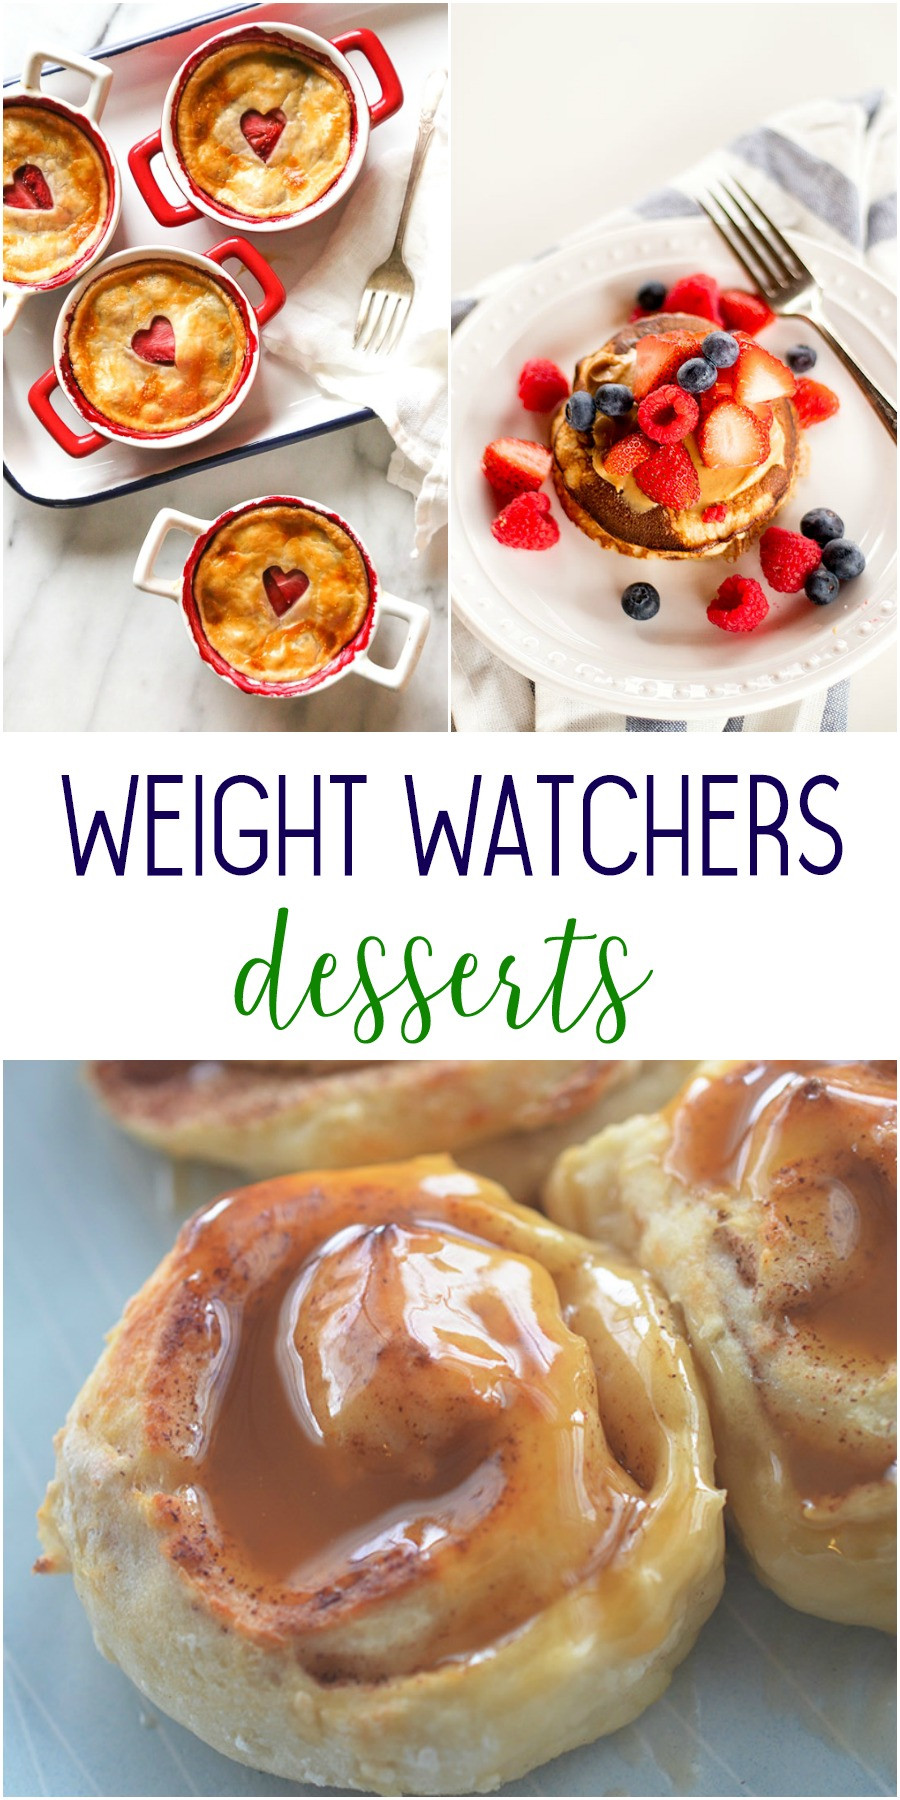 Weight Watchers Recipes Desserts
 Weight Watchers Desserts The Endless Appetite